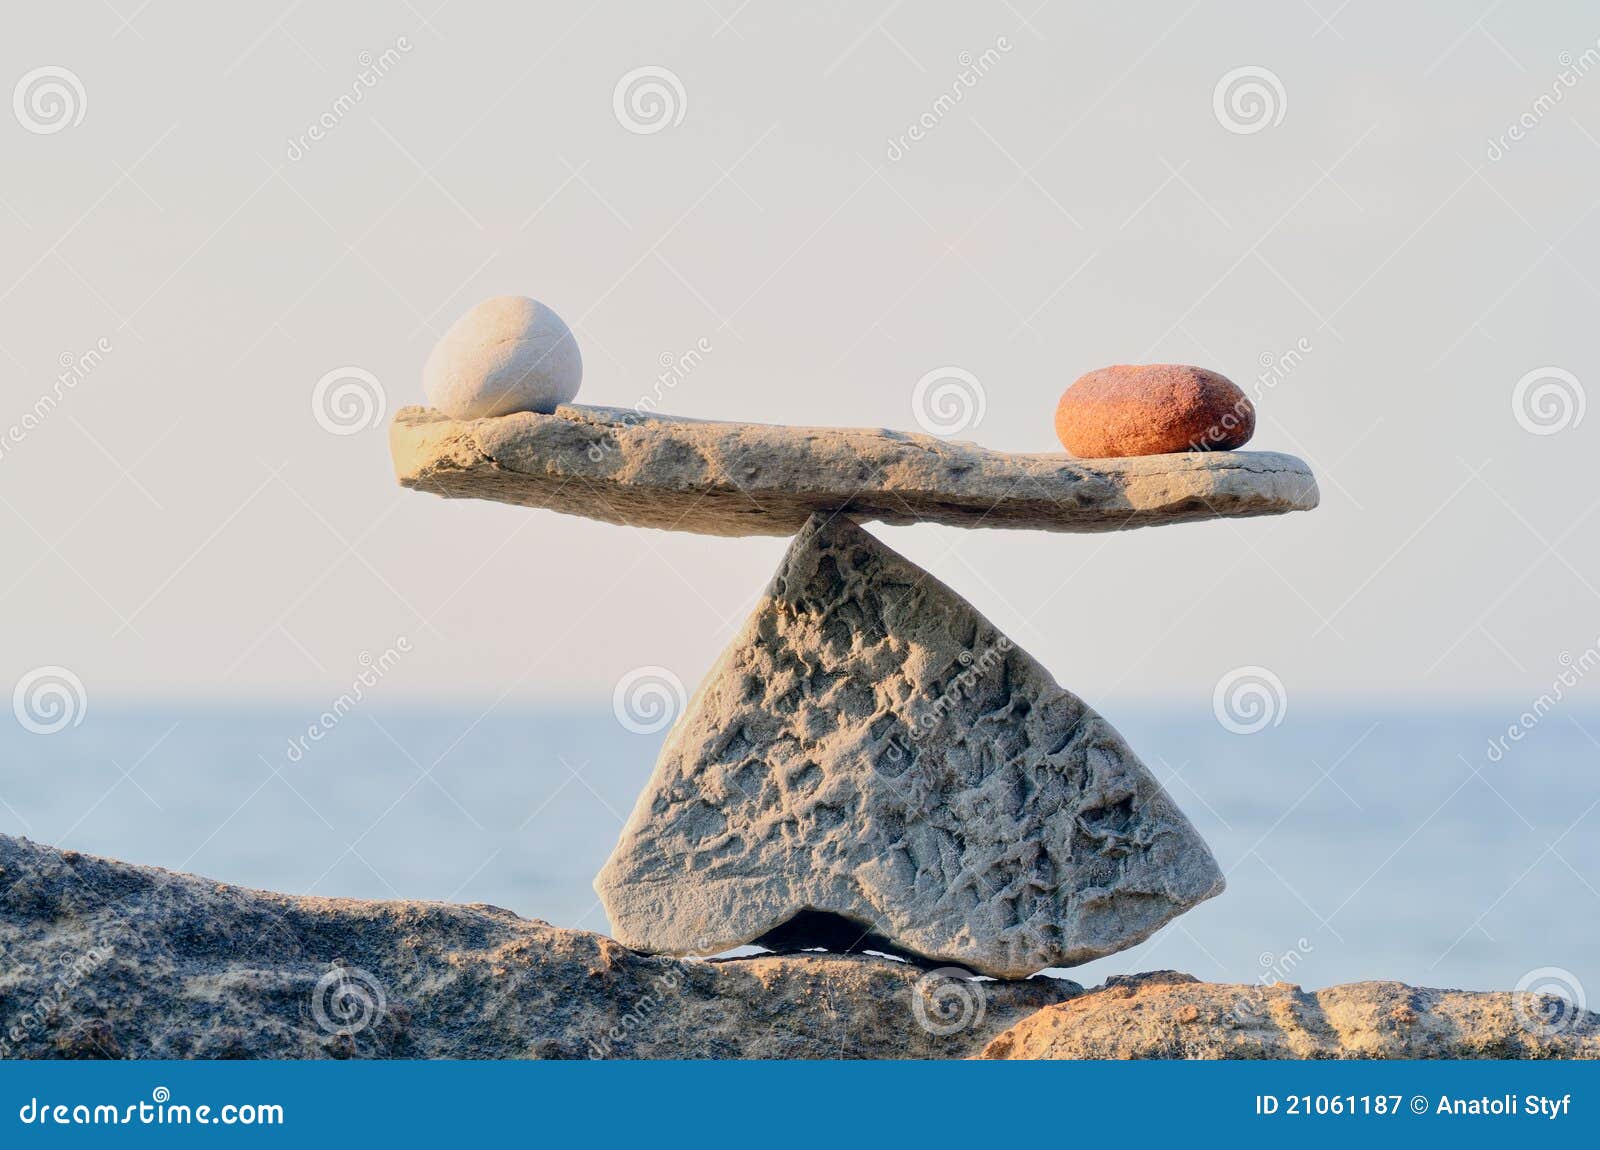 balancing